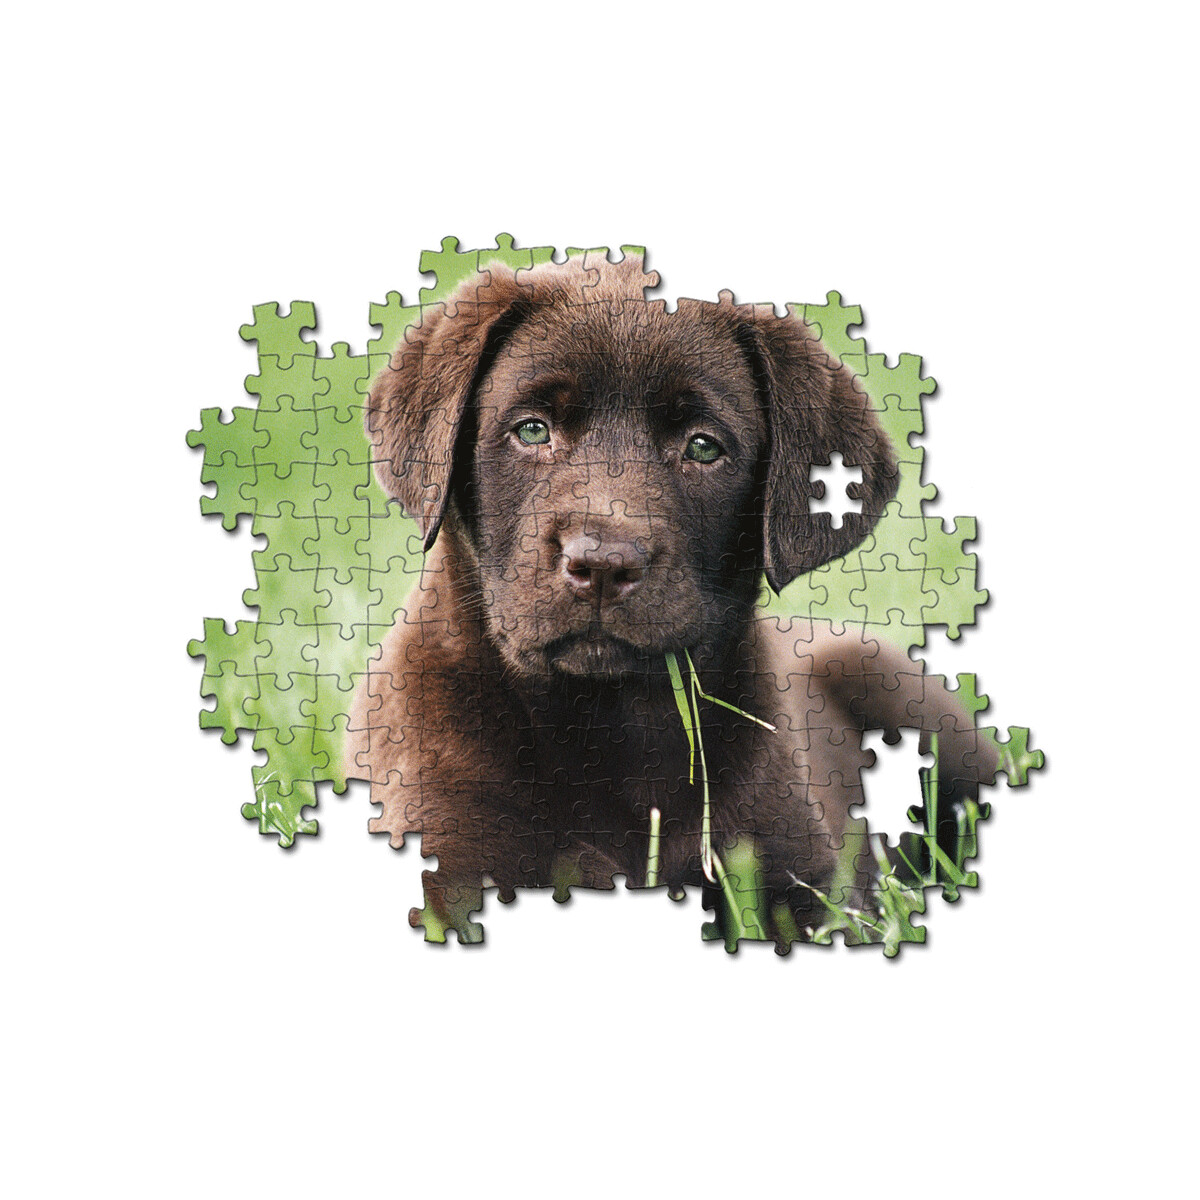 Clementoni - 35072 - puzzle 500 chocolate puppy 49 x 36 cm - CLEMENTONI